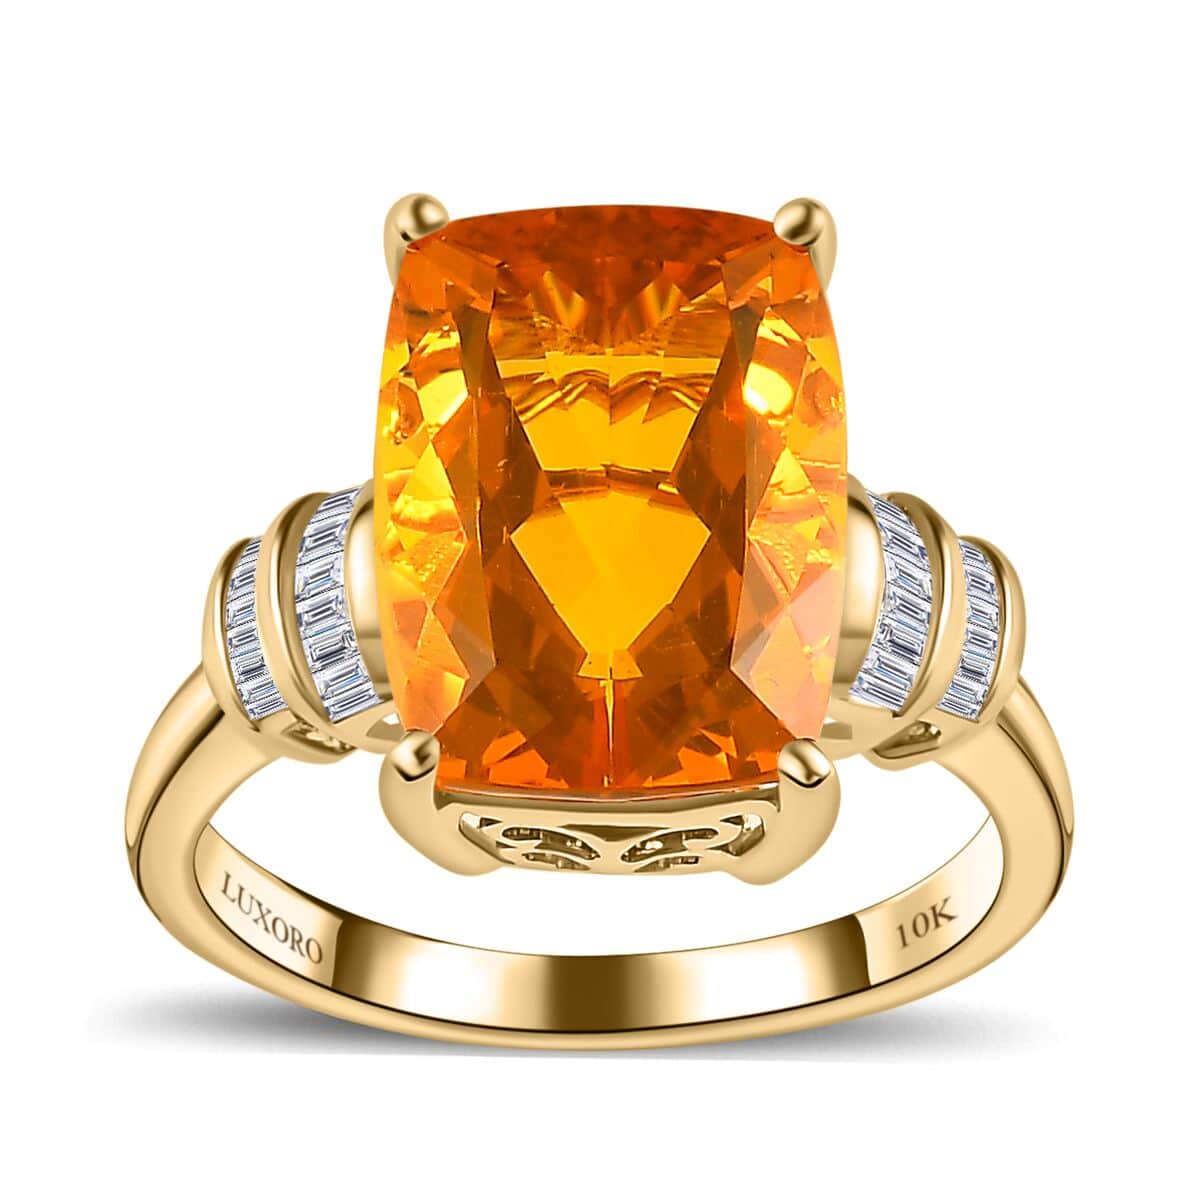 Luxoro 10K Yellow Gold Premium BURITI Fire Opal and G-H I3 Diamond Ring (Size 9.0) 4.85 ctw image number 0